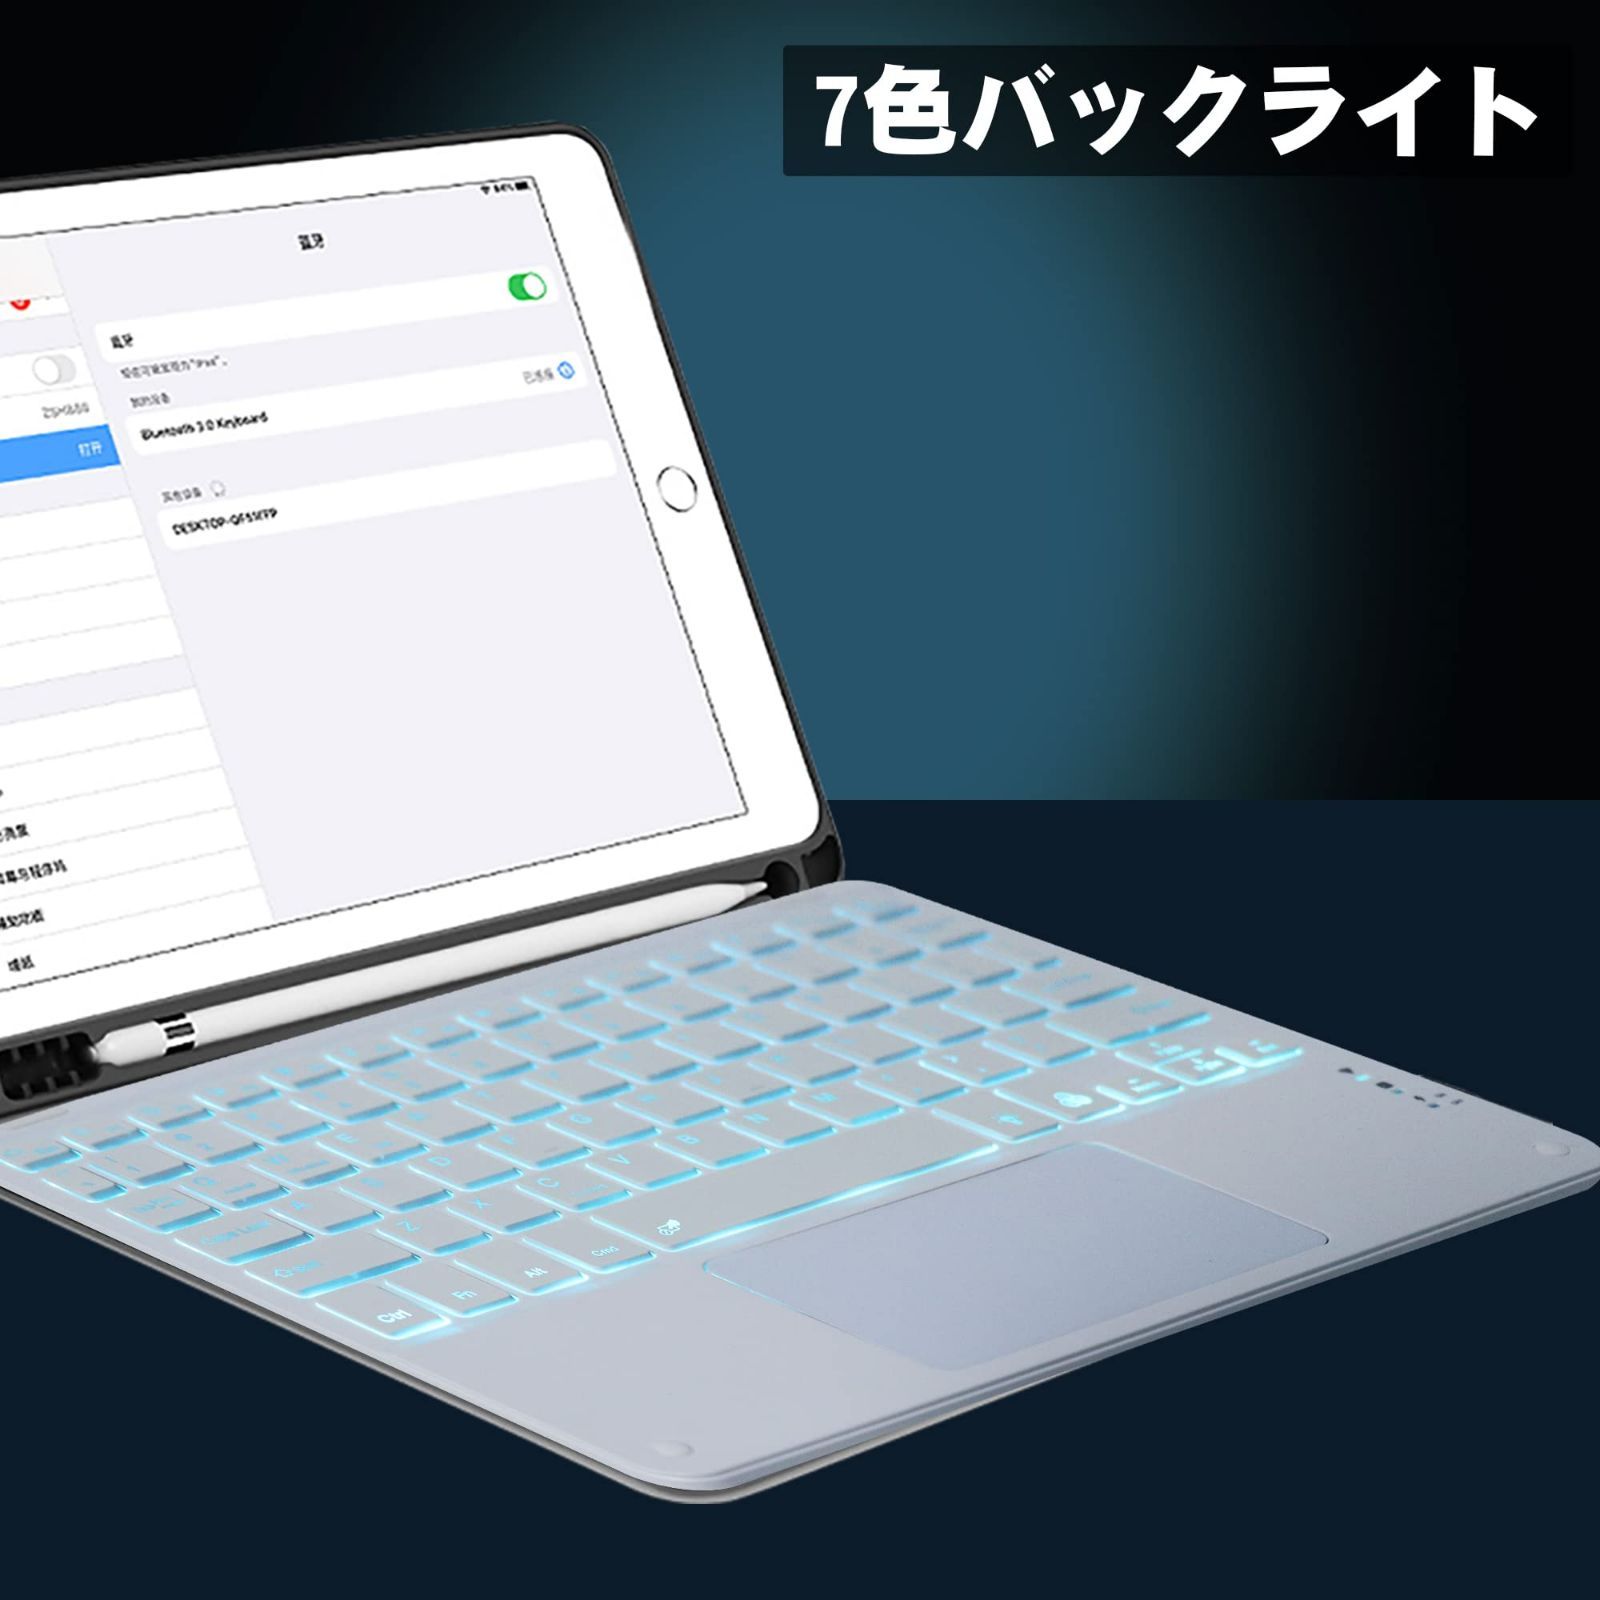 NAMOTUOFO ワイヤレスキーボード Bluetoothキーボード ipadキーボード タッチパッド付き 軽量 薄型ケースキーボード 携